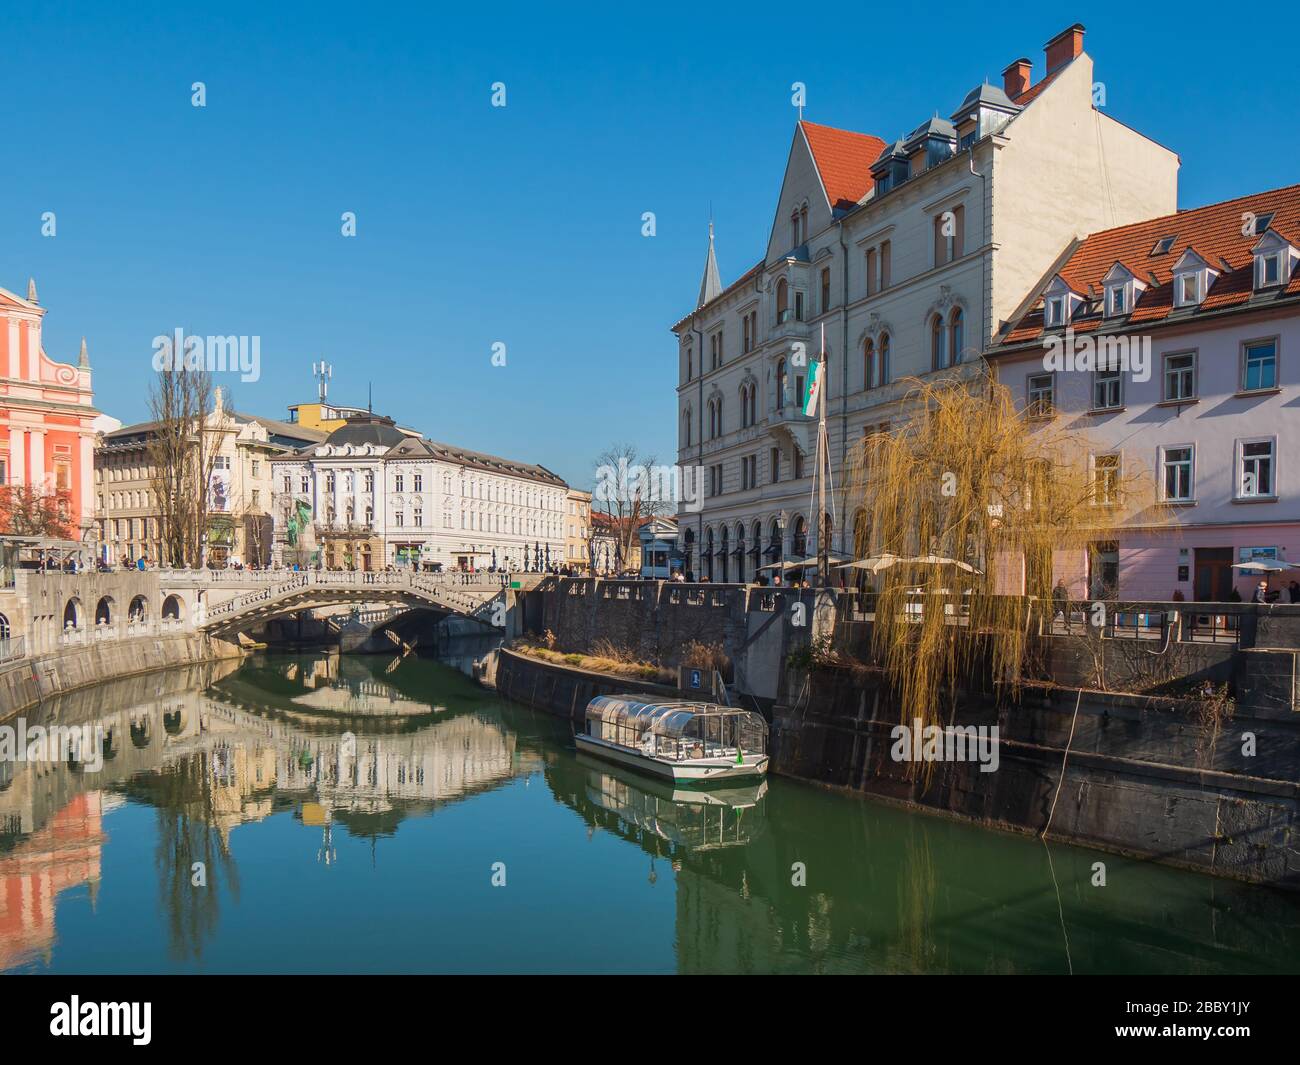 Ljubljana capital city of Slovenia, old town center brdige, square, church architecture view. Stock Photo